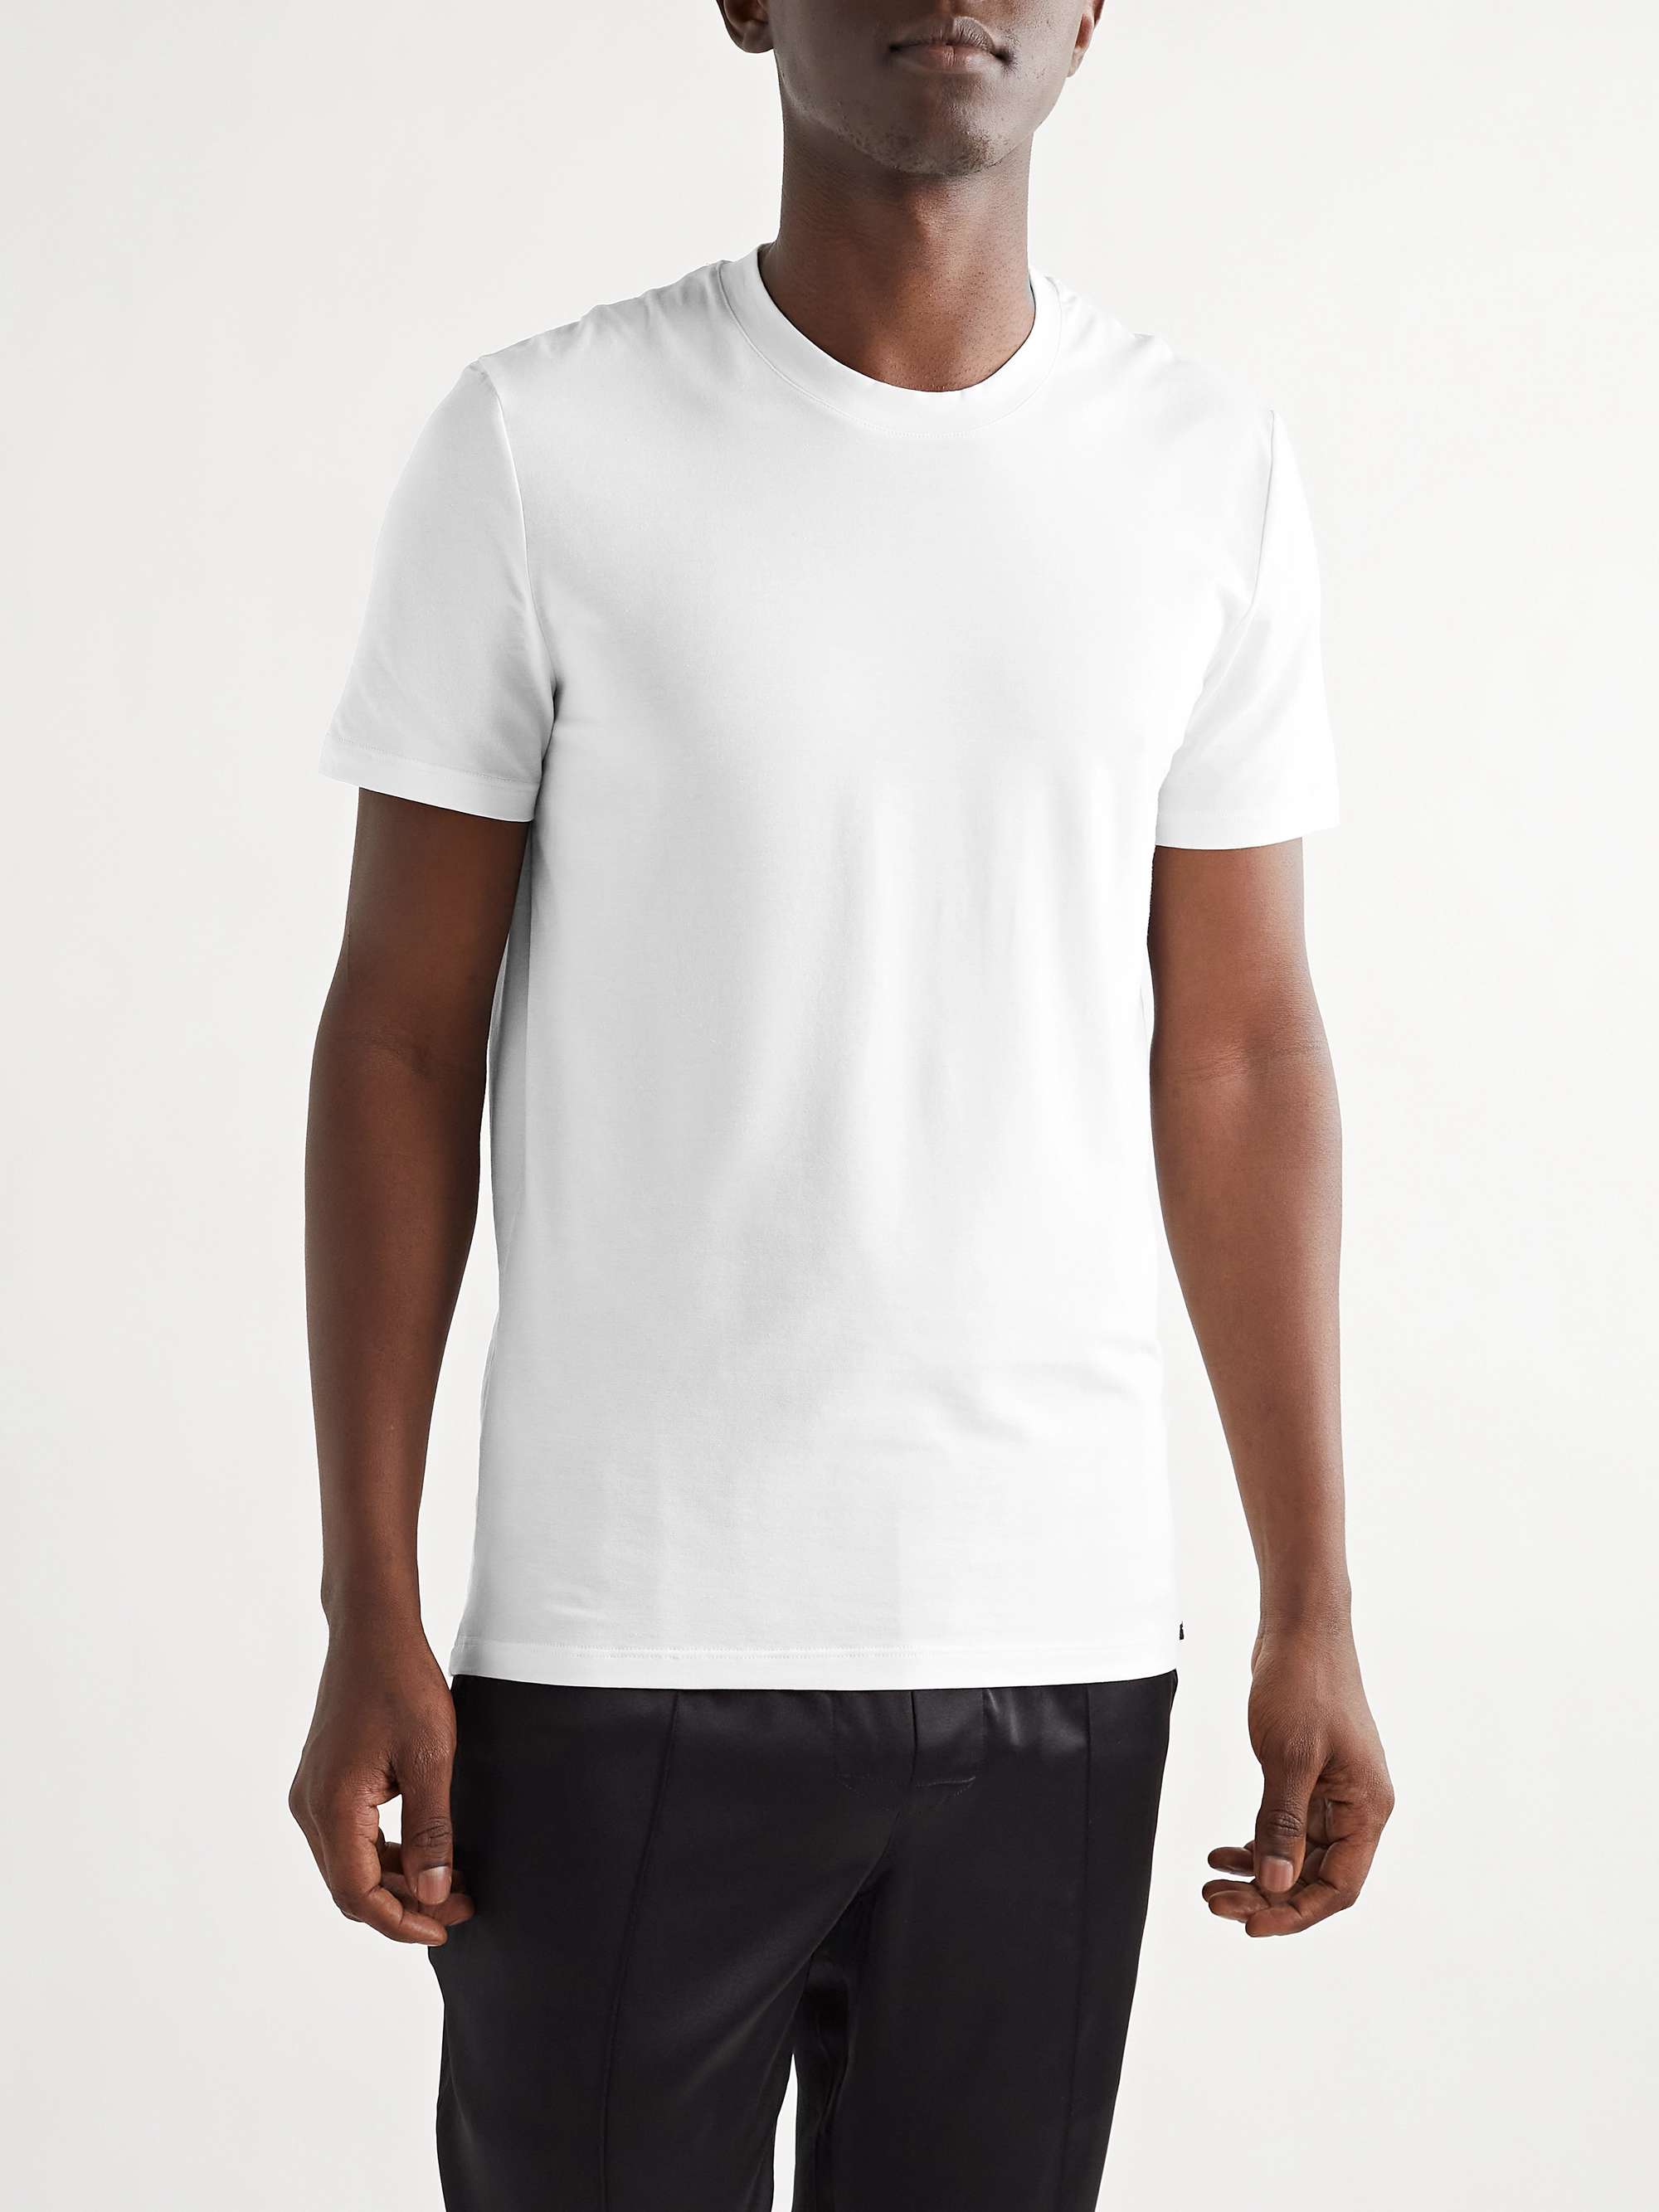 TOM FORD Stretch Cotton and Modal-Blend T-Shirt for Men | MR PORTER